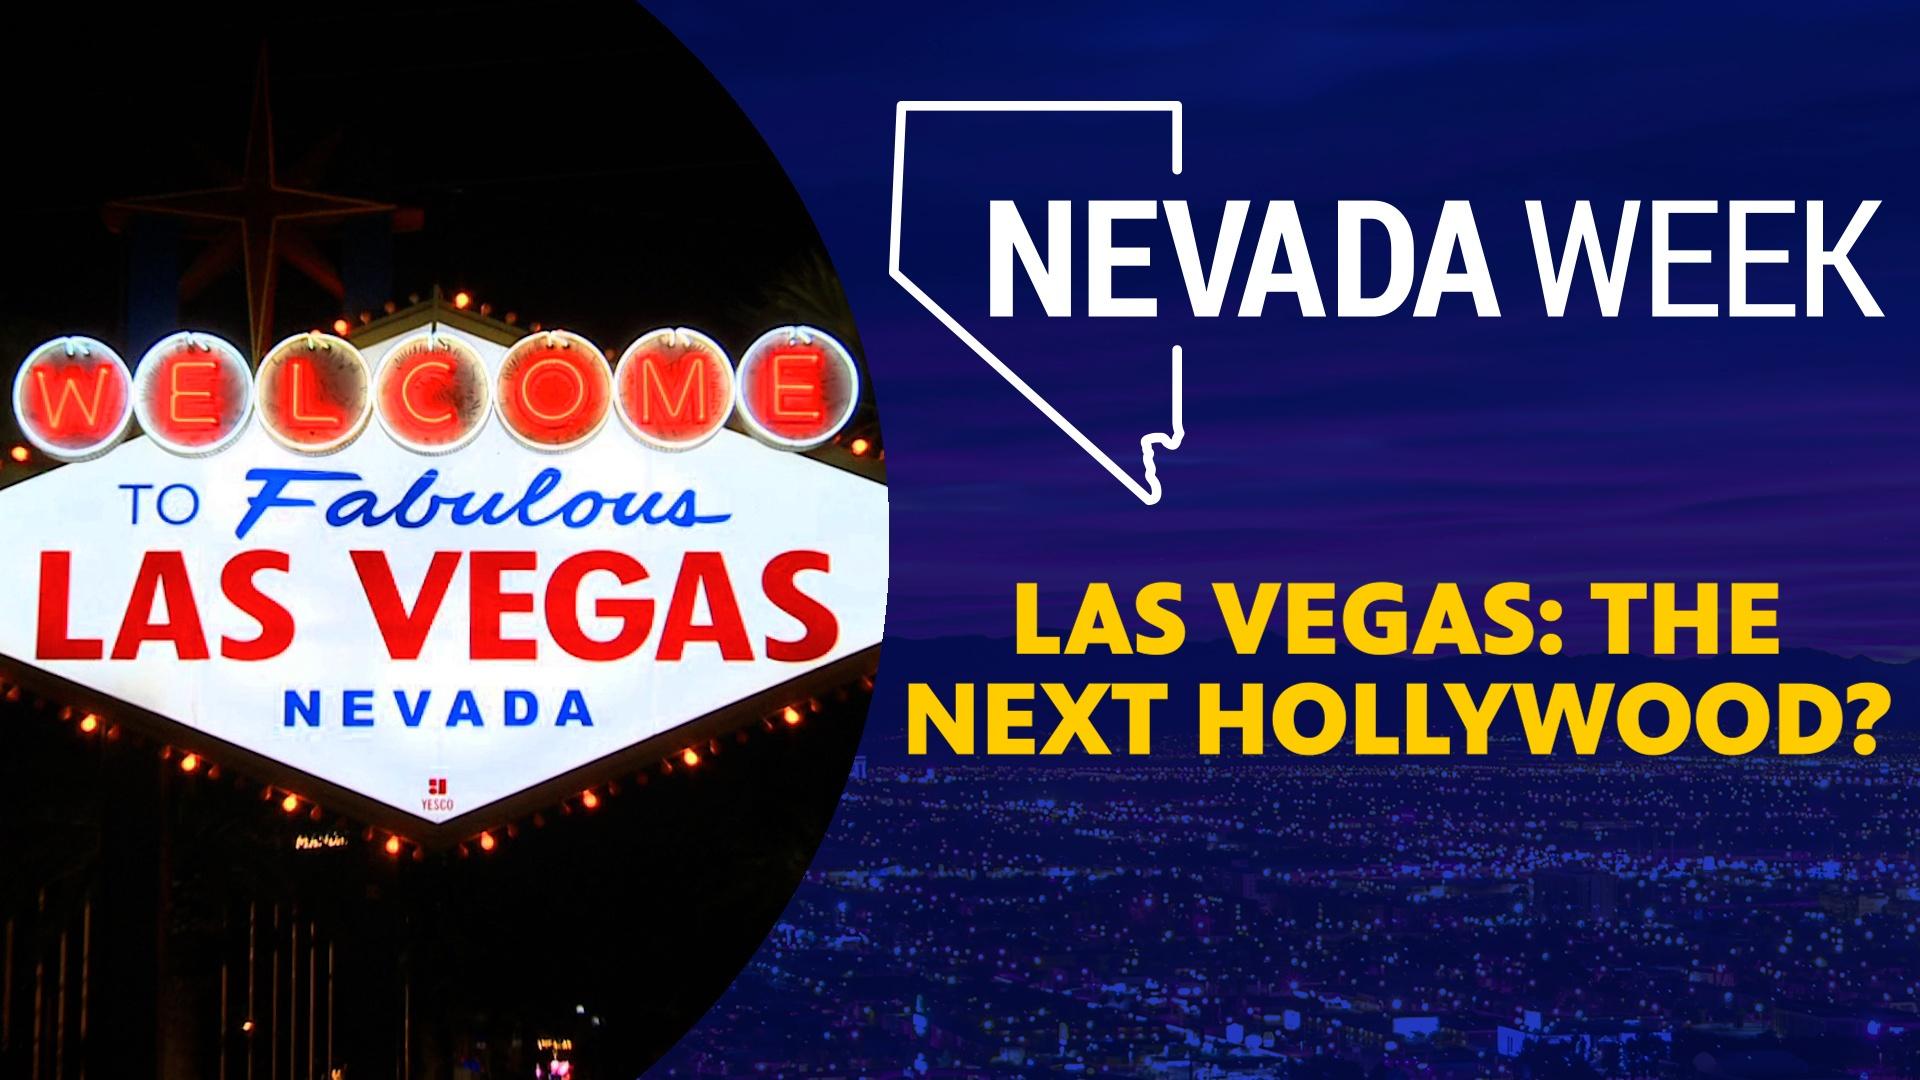 Las Vegas: The Next Hollywood?